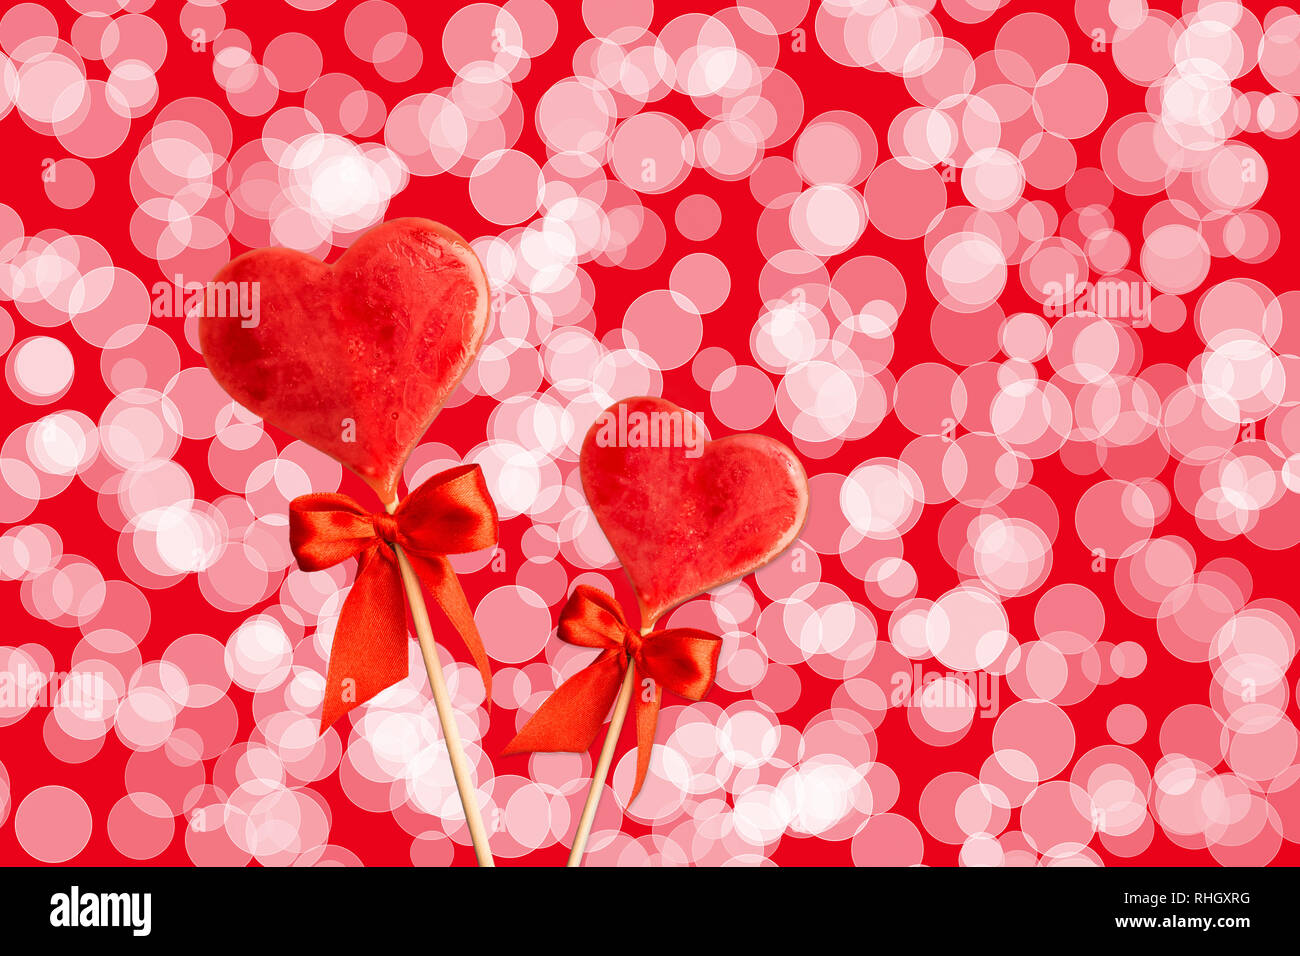 Download 640 Koleksi Background Love Abstract HD Terbaru